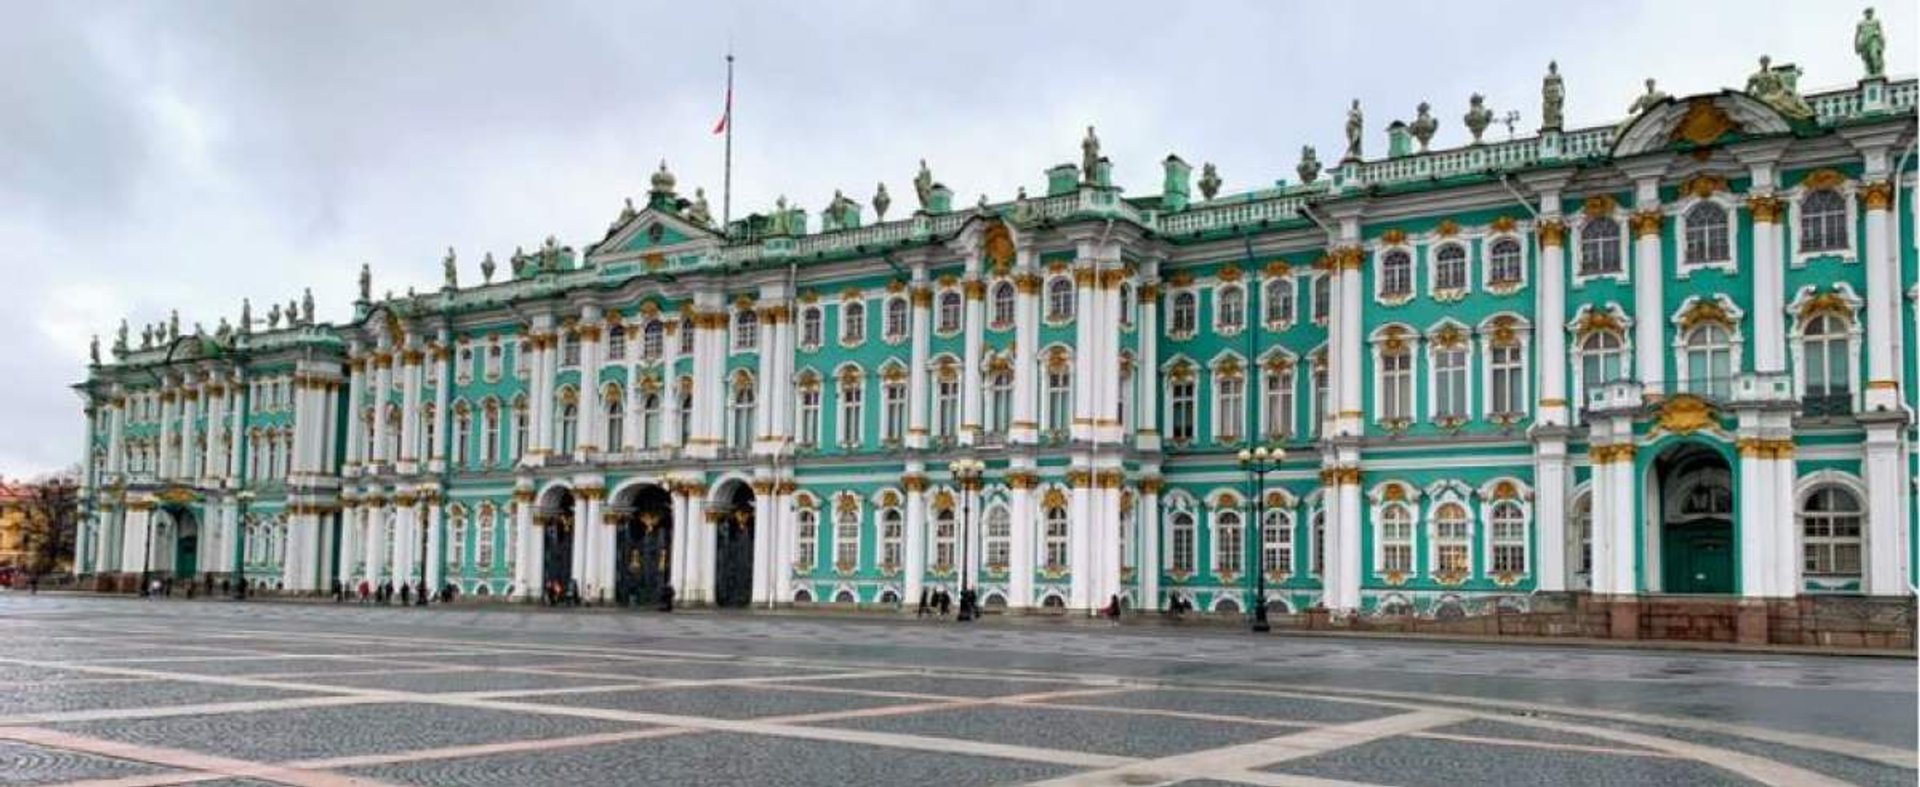 Petersburg to dawna stolica Rosji